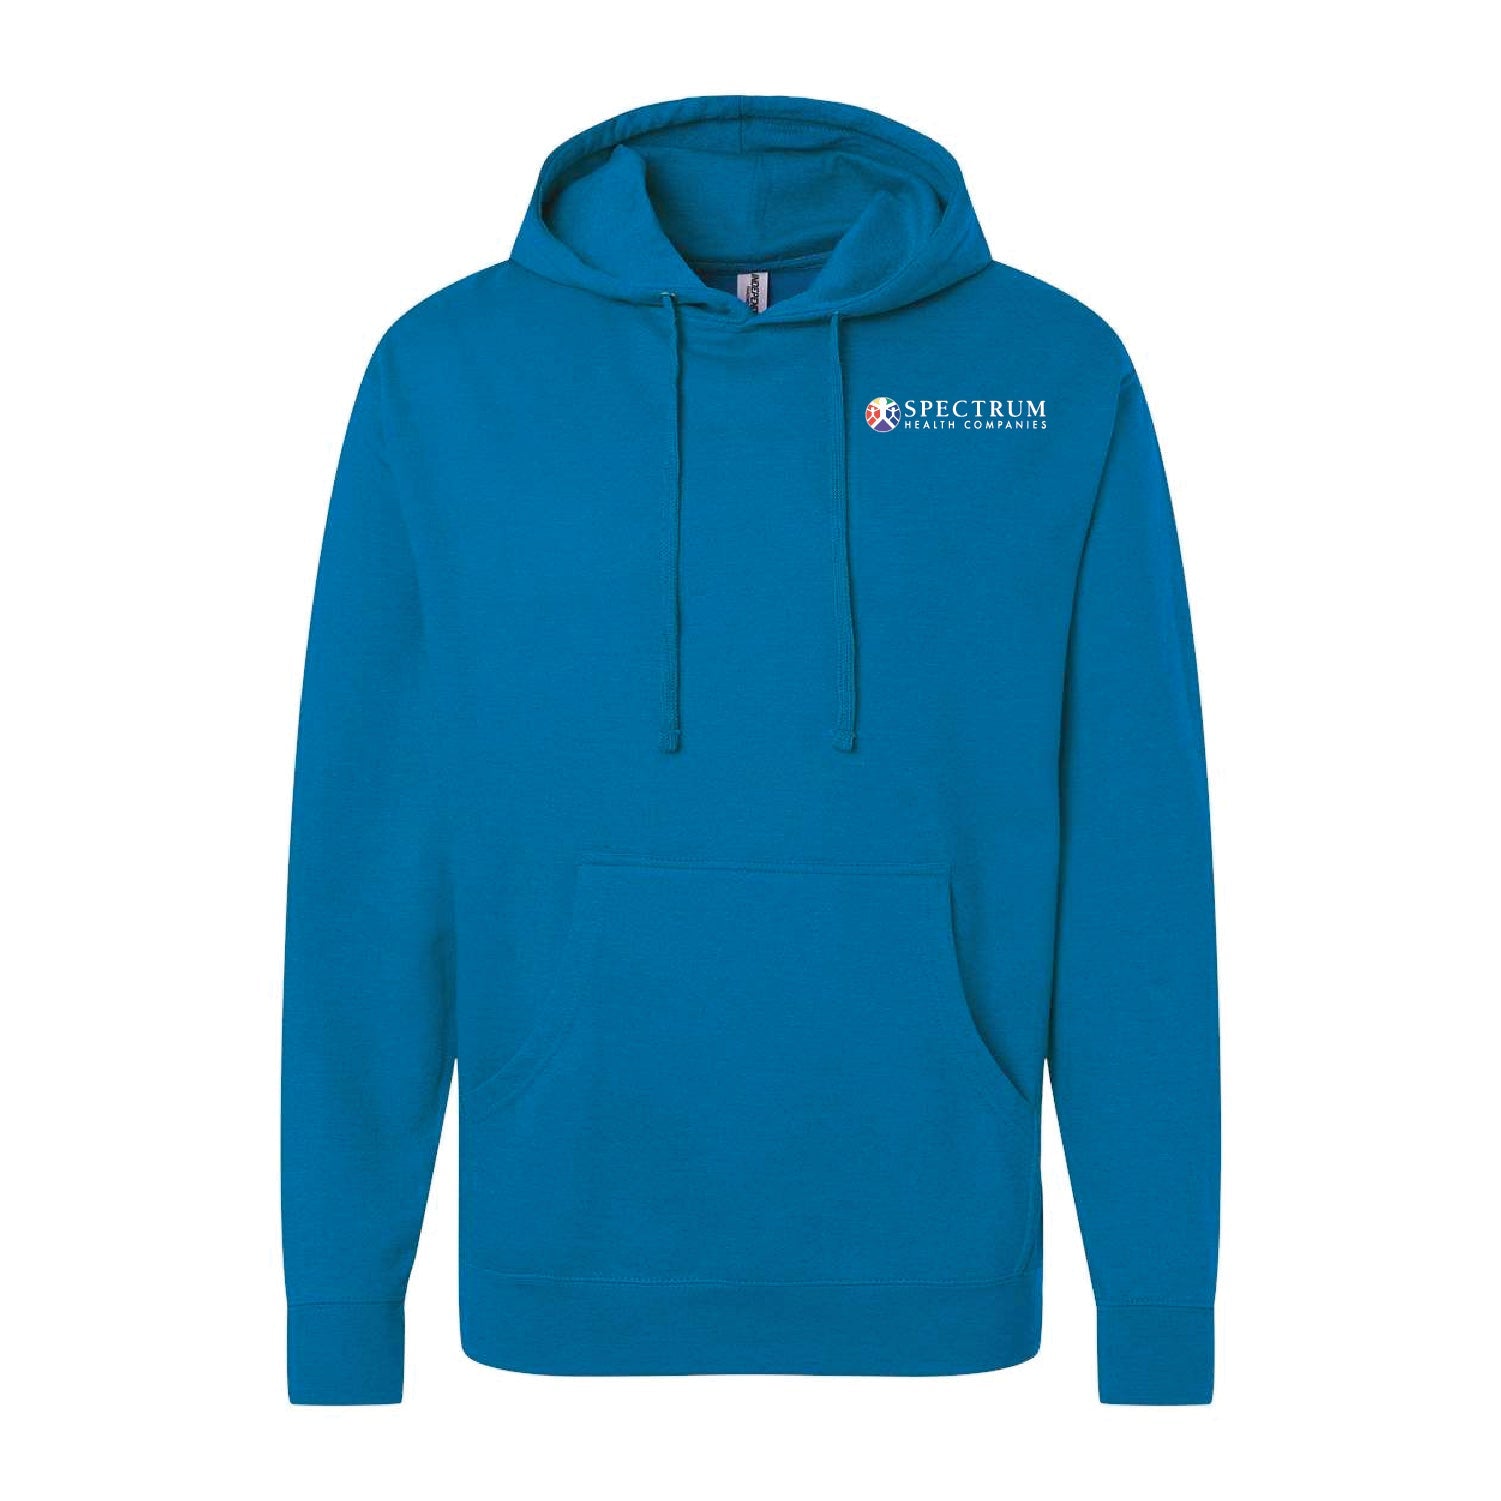 Spectrum Health Companies Unisex Midweight Hooded Sweatshirt - DSP On Demand